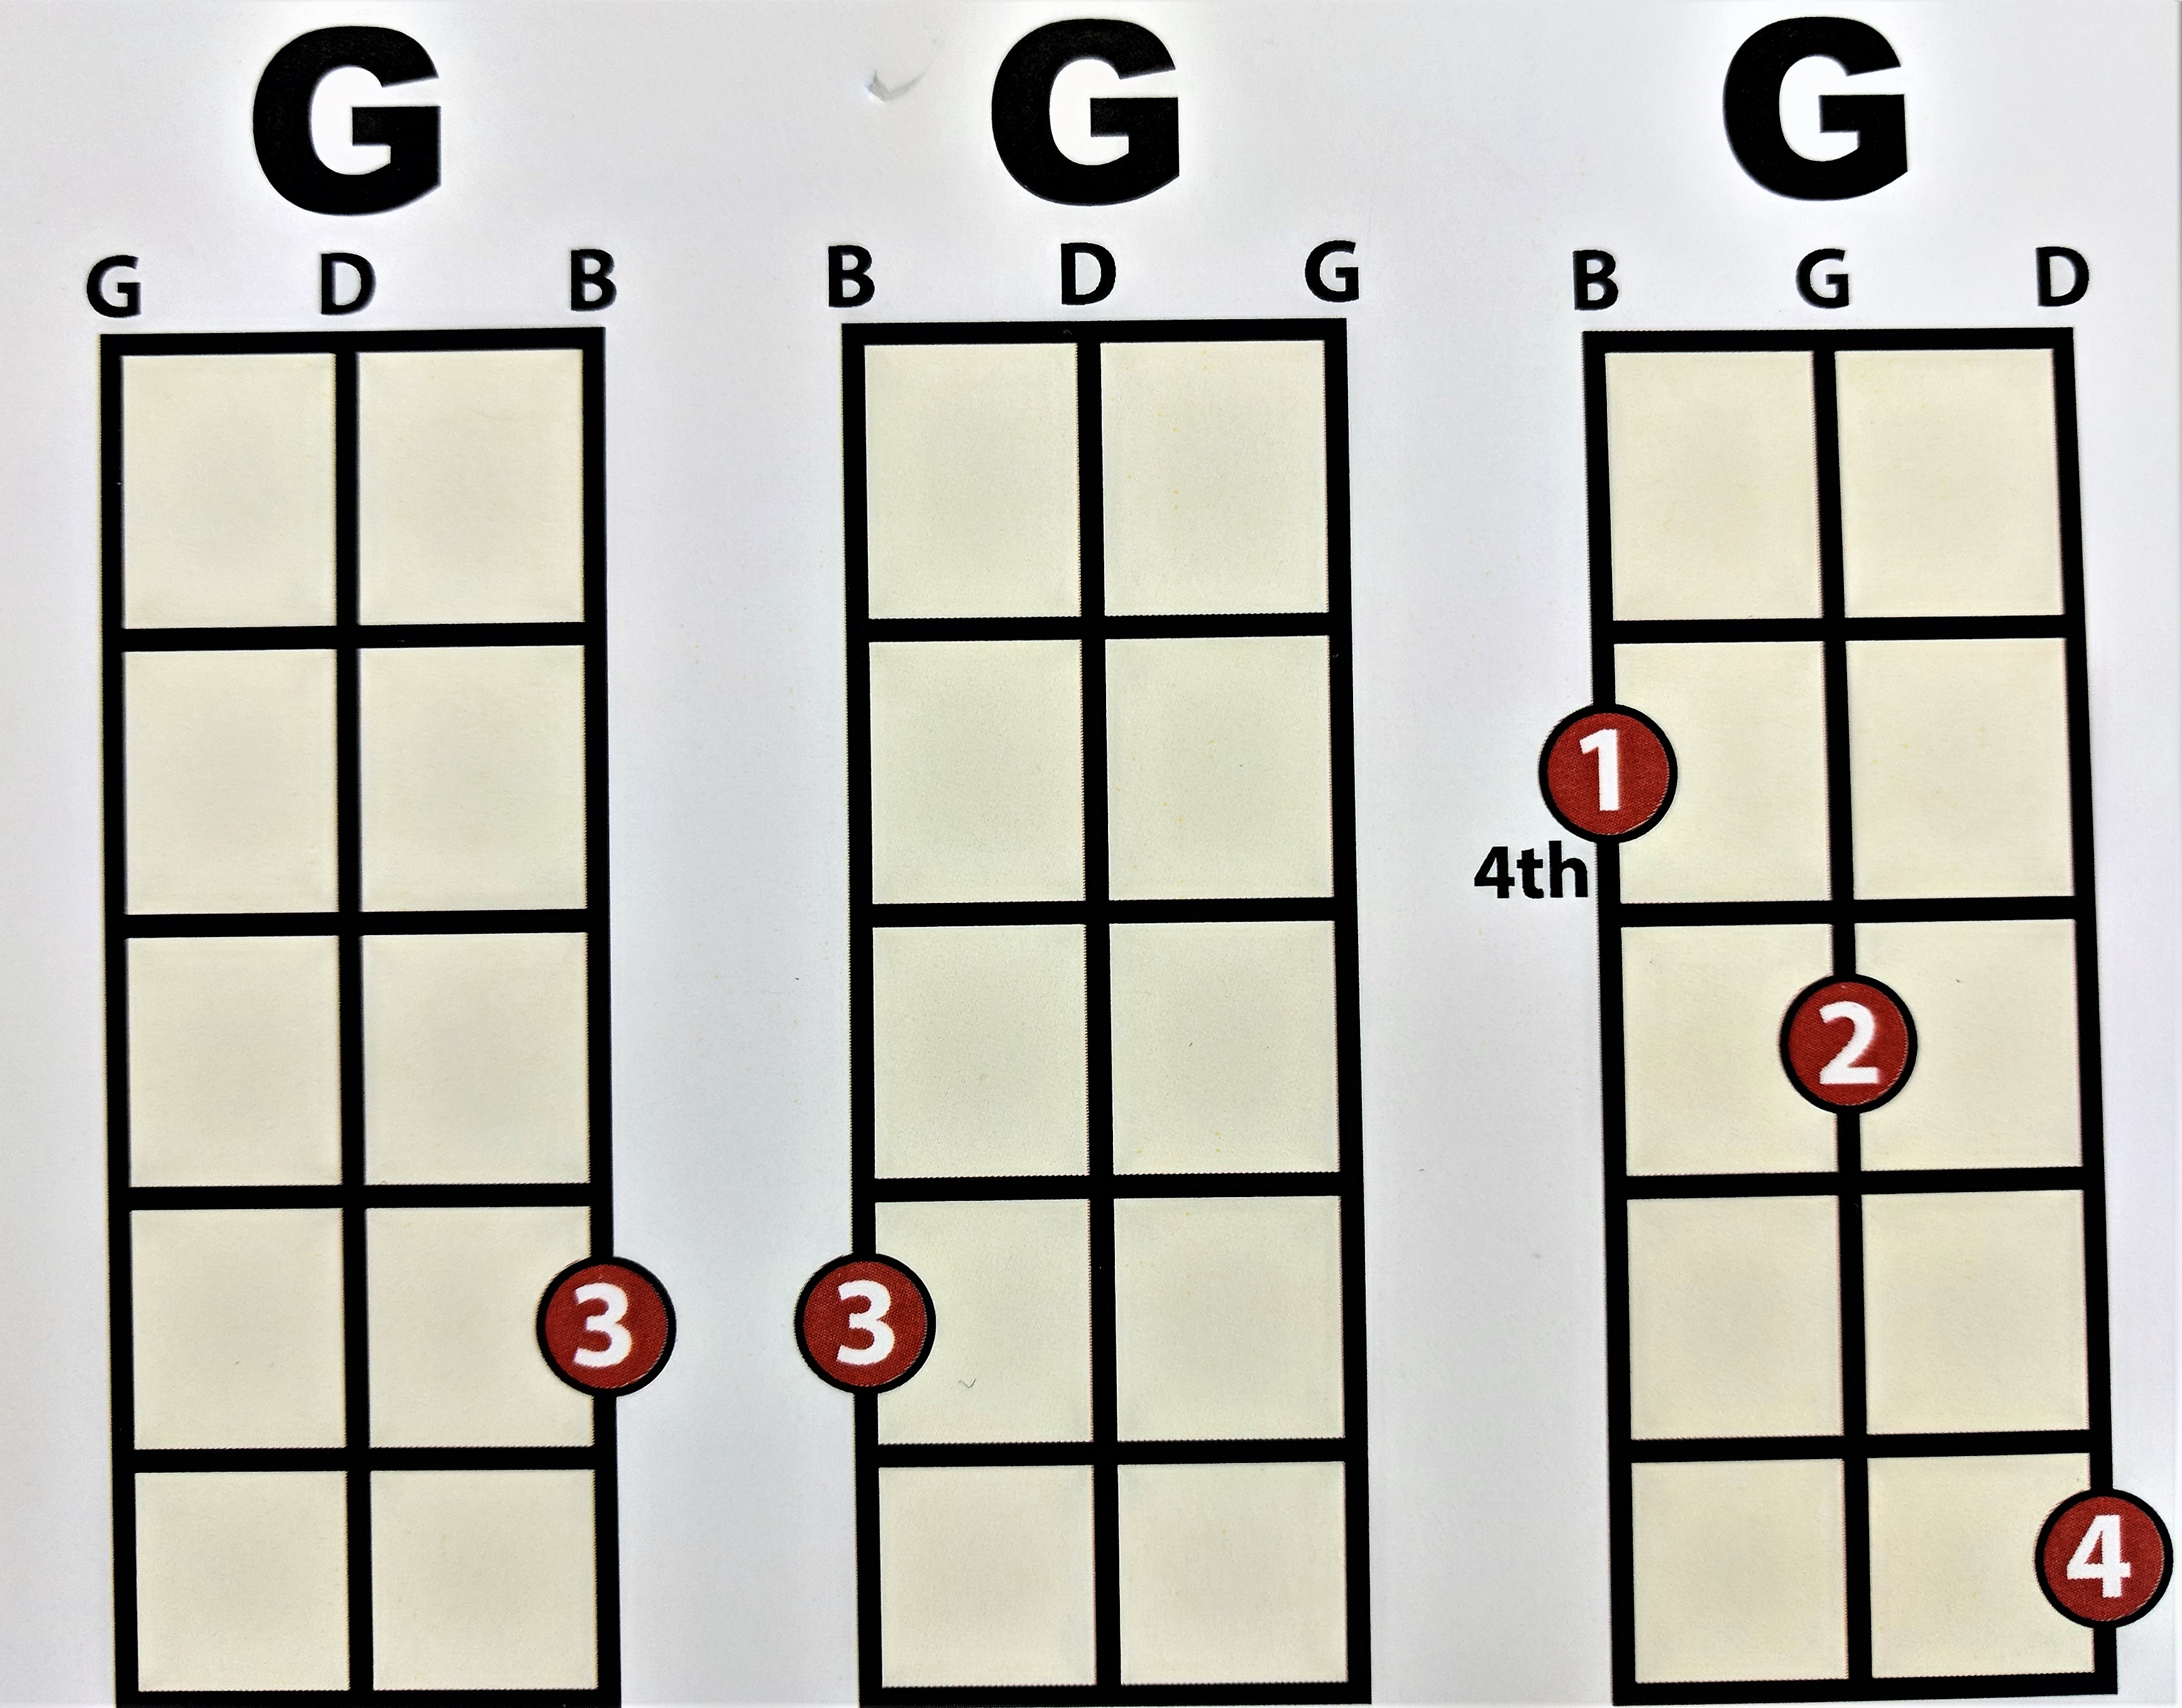 Chord chart example of G Major chord shapes for a cigar box guitar tuned G-D-G